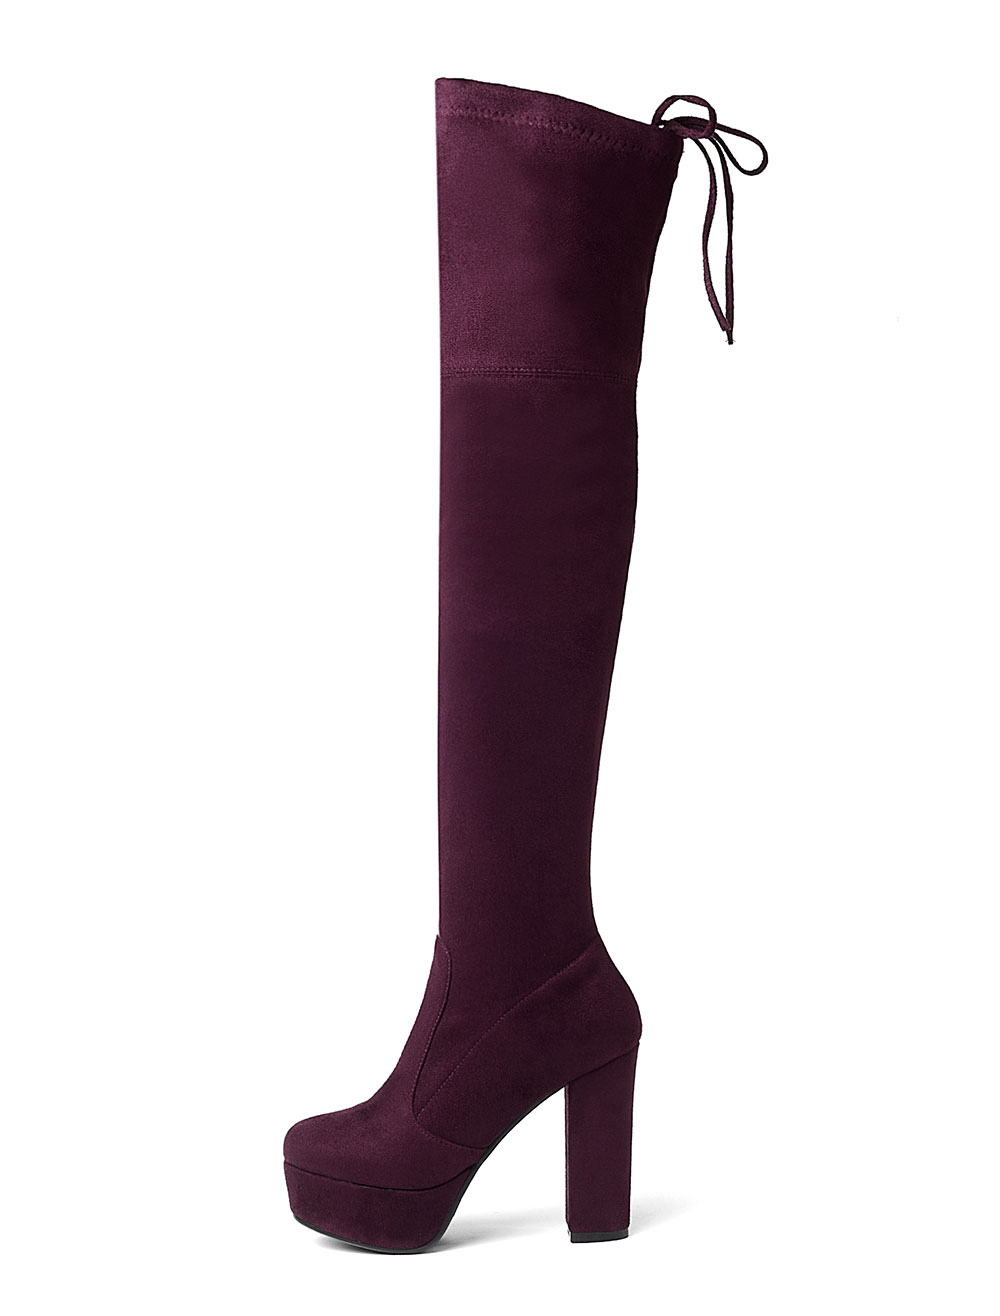 burgundy thigh high boots